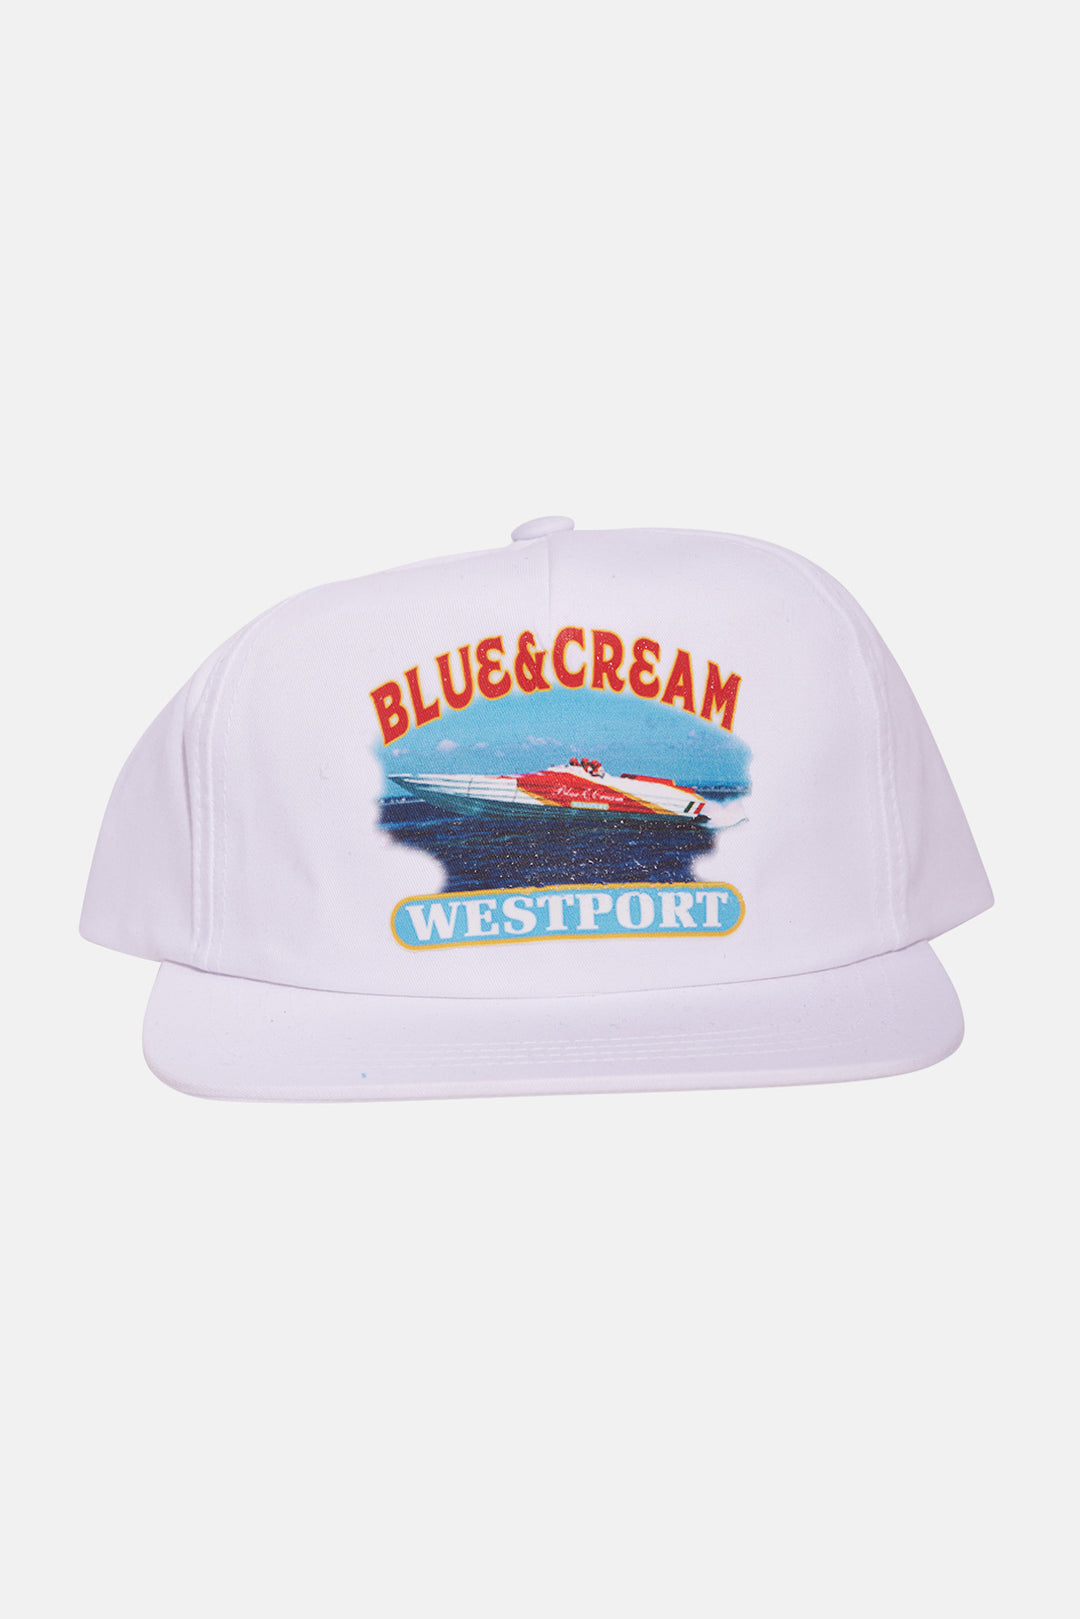 Westport Speed Boat Snapback White